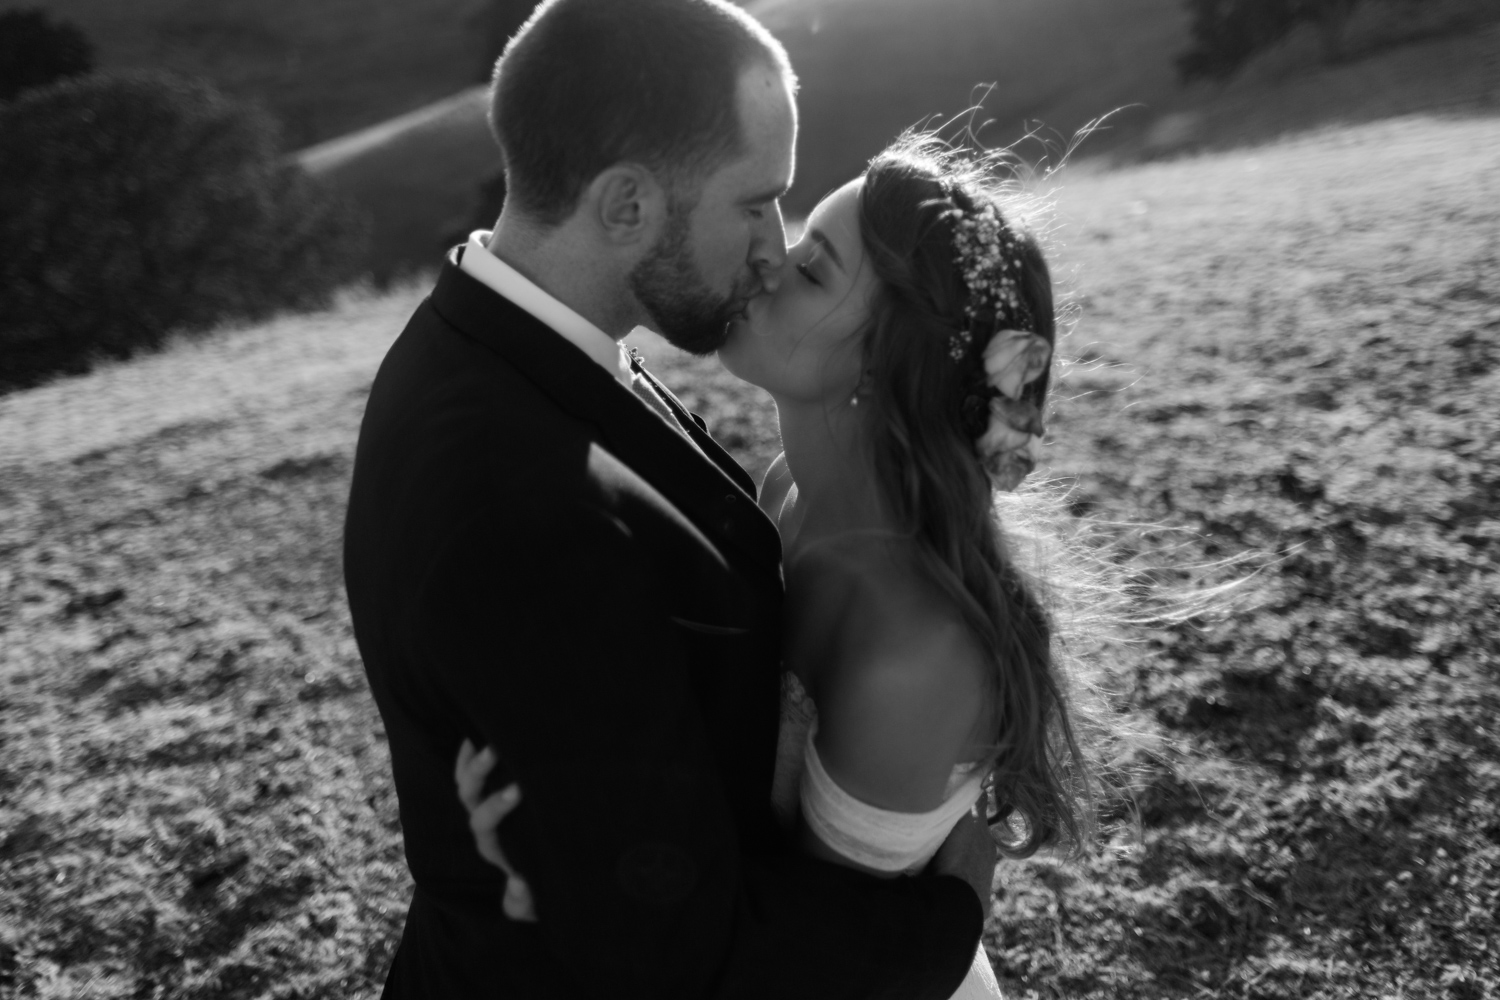 Napa Valley Vacaville Wedding Photographer - Hannah & Stephen - The Gathering Season x weareleoandkat 057.jpg